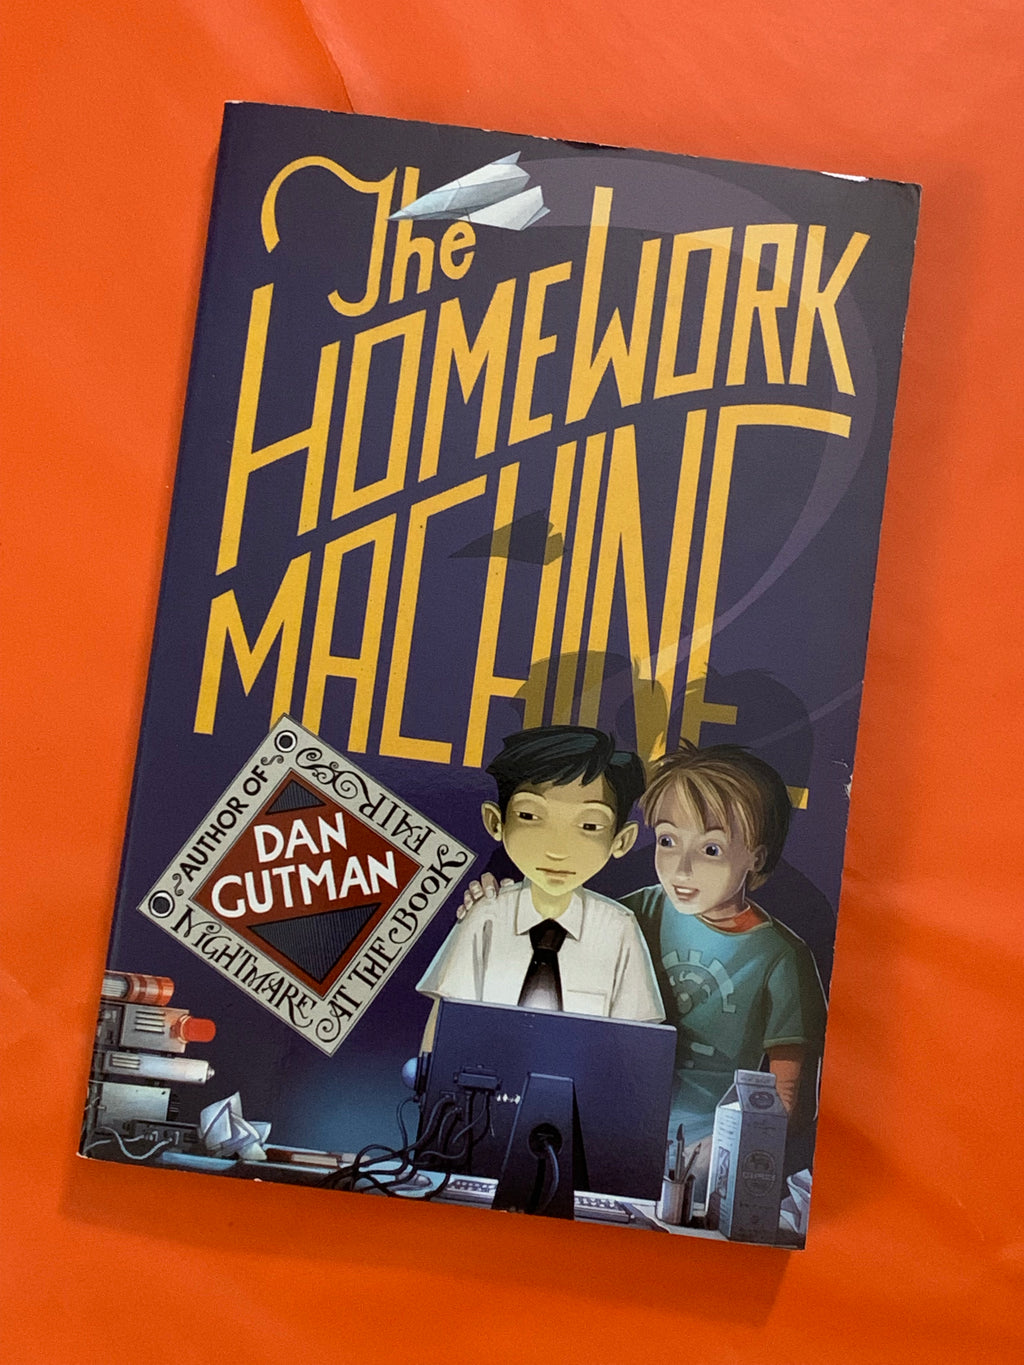 The Homework Machine- By Dan Gutman